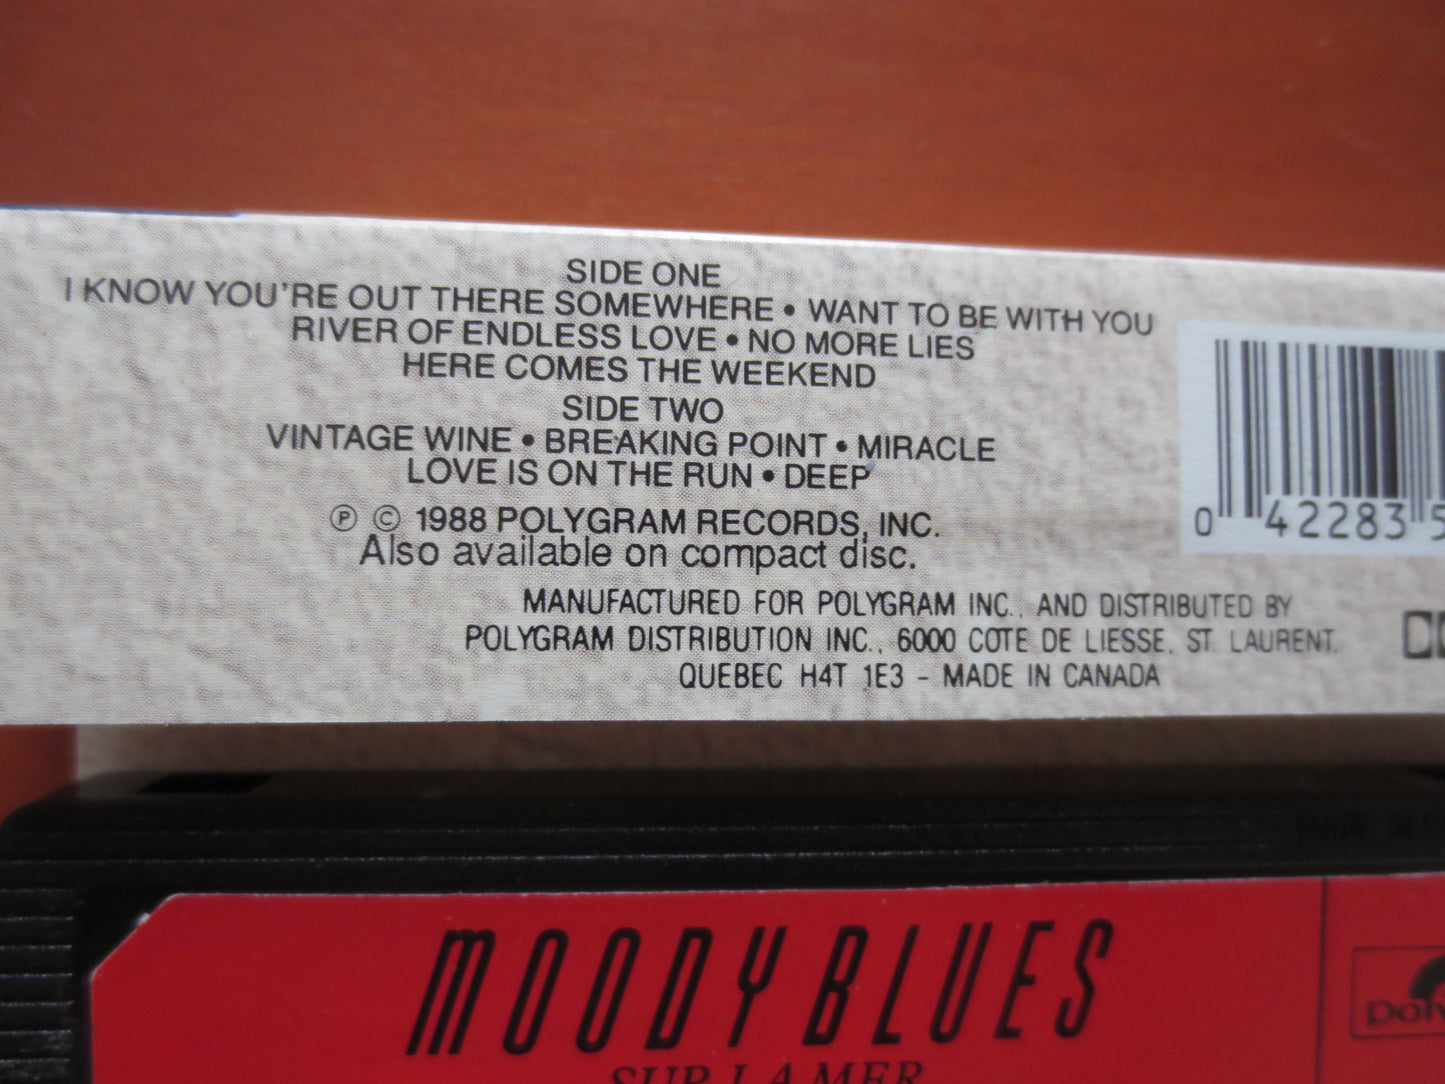 The MOODY BLUES, SURLAMER Album, Rock Tape, The Moody Blues Lp, Tape Cassette, Music Cassette, Pop Cassette, 1988 Cassette